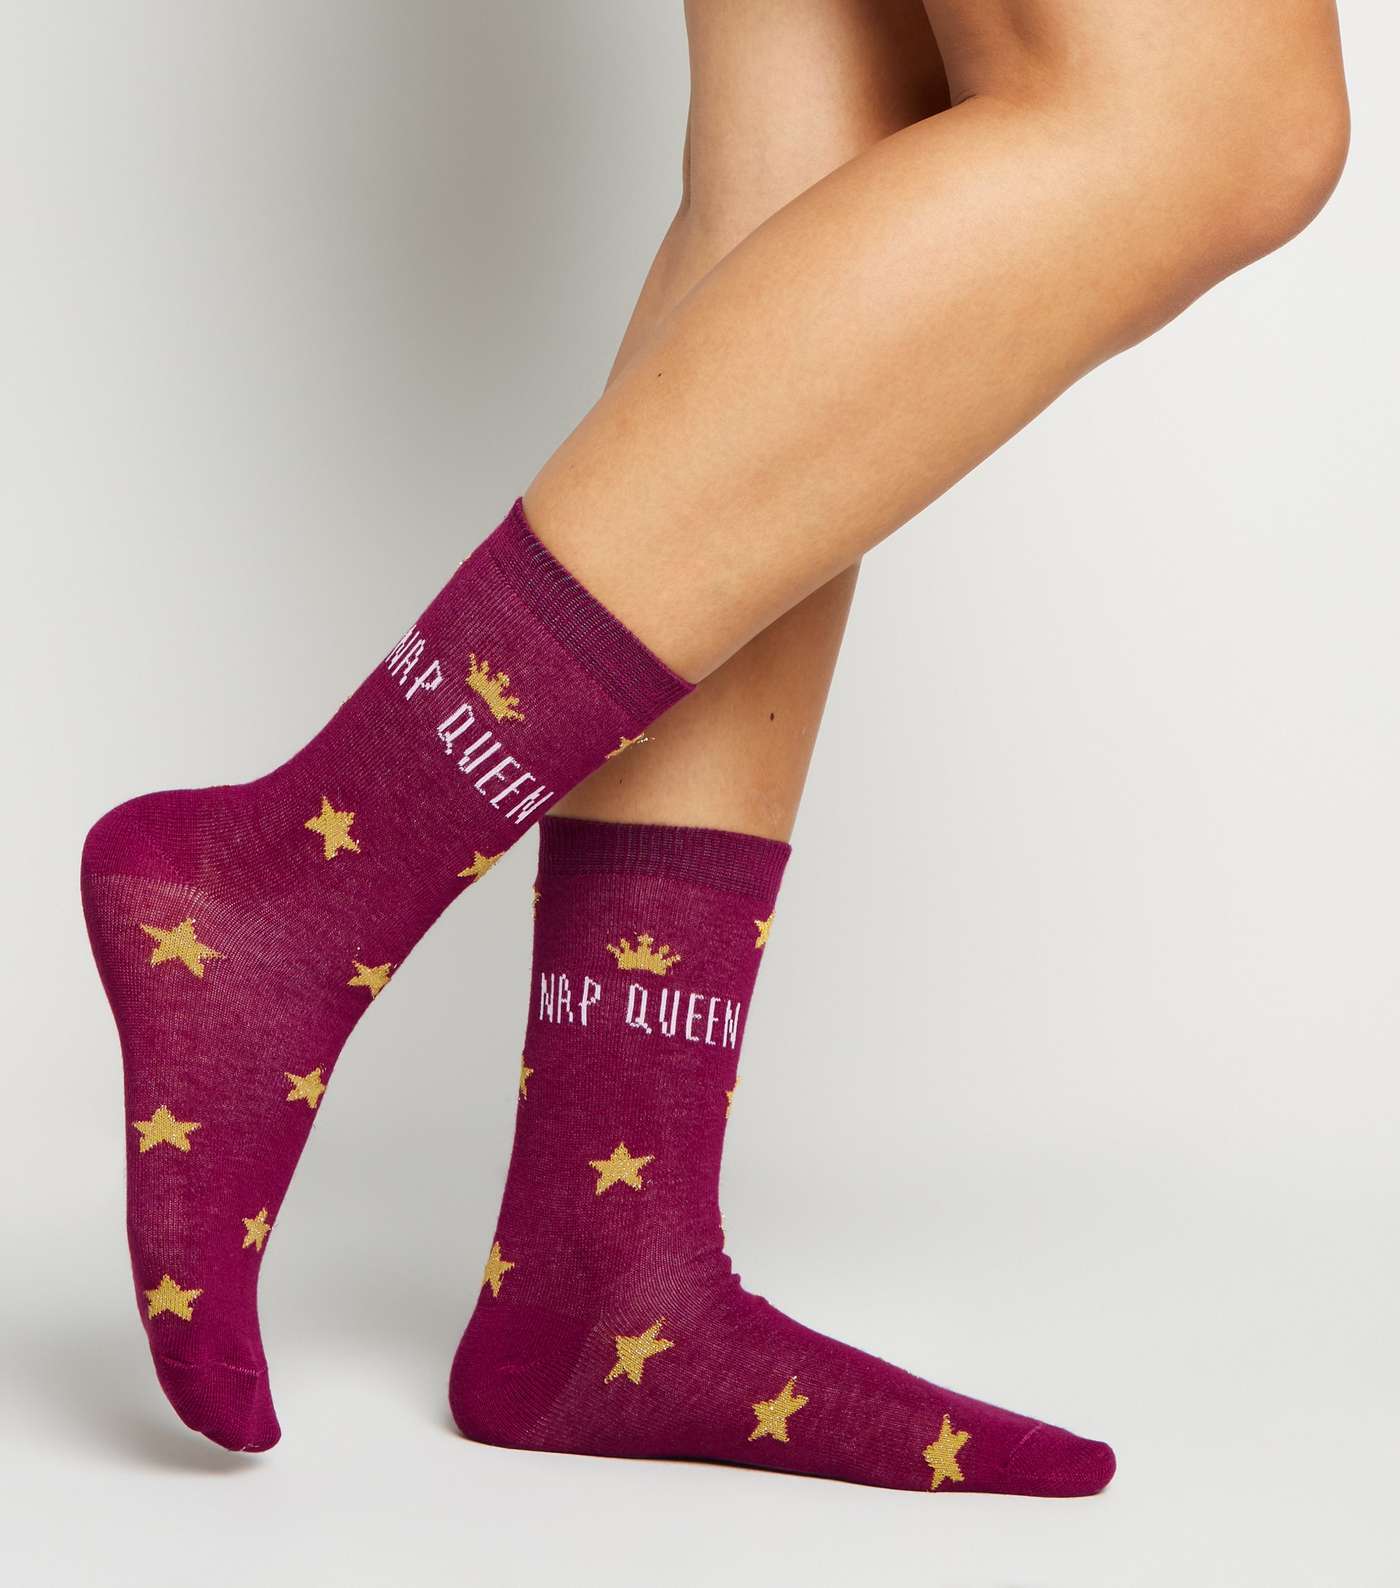 Burgundy Star Nap Queen Slogan Socks Image 2